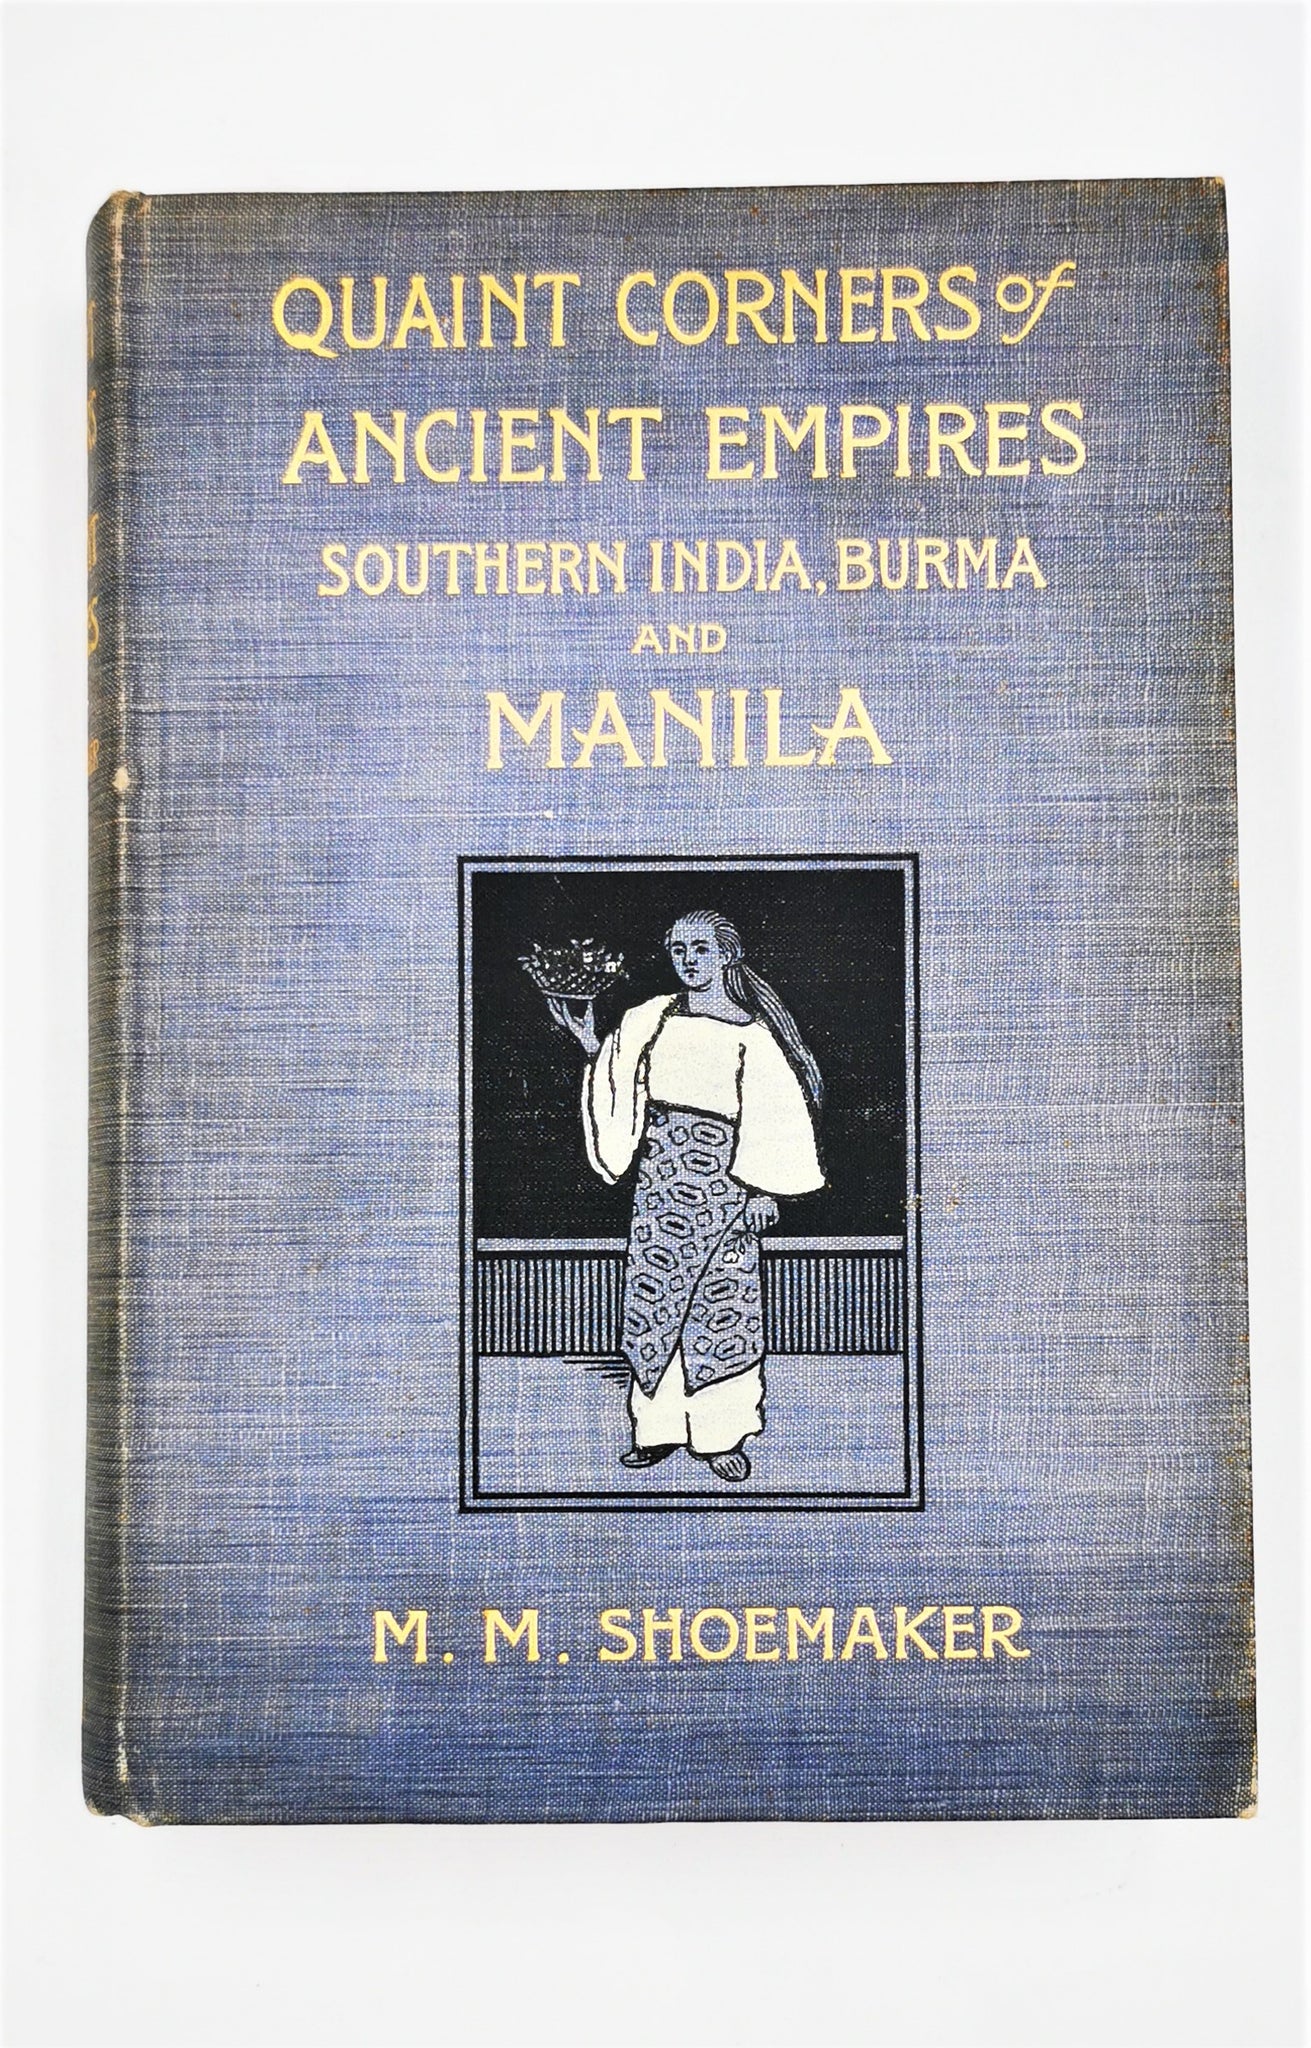 QUAINT CORNERS OF ANCIENT EMPIRES: SOUTHERN INDIA, BURMA AND MANILA